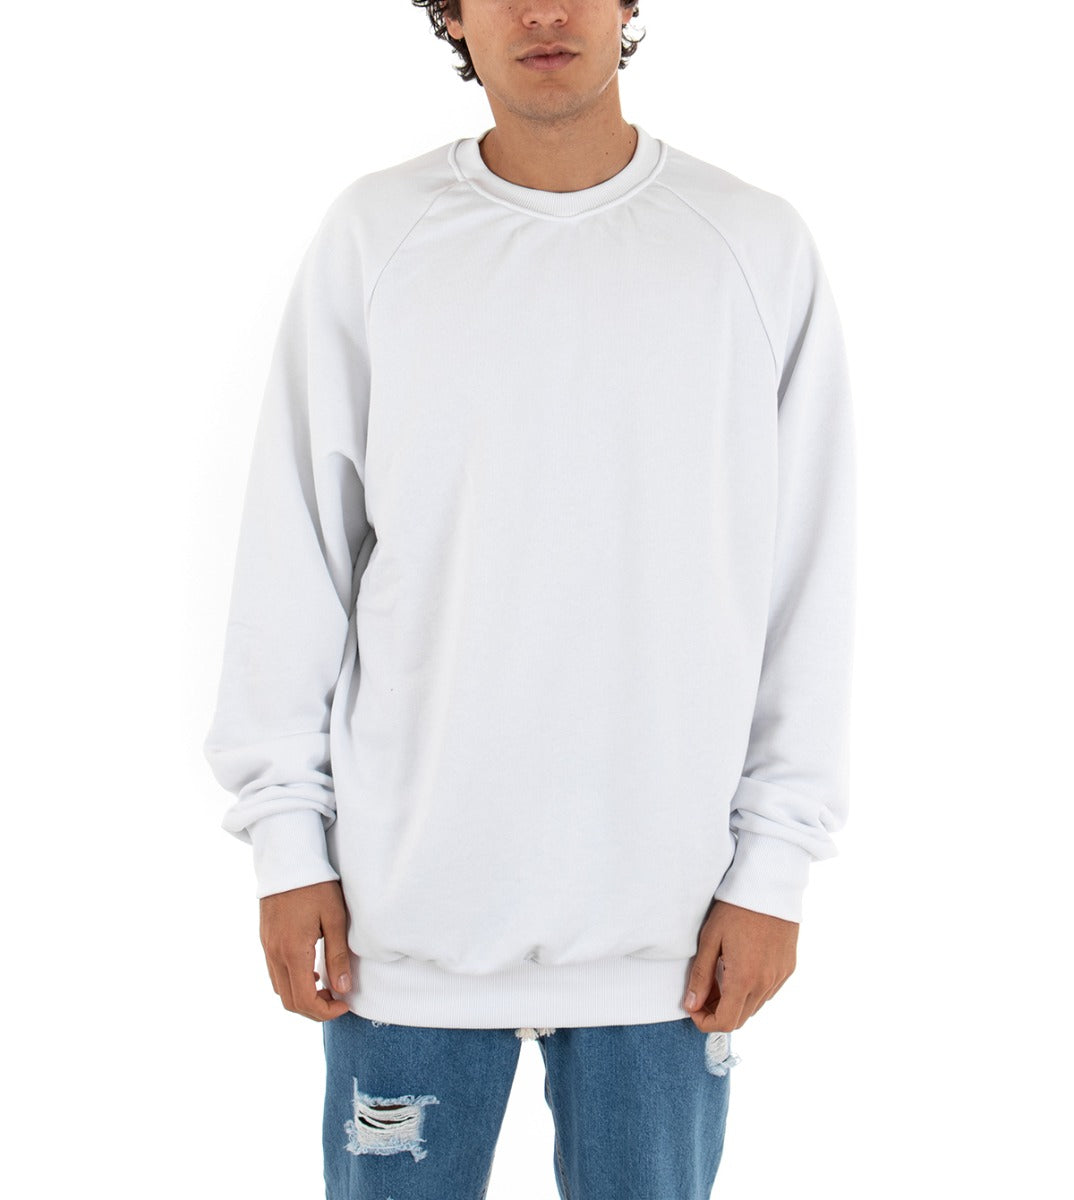 Men's White Crewneck Sweatshirt Solid Color Oversized White Shirt GIOSAL-F2732A